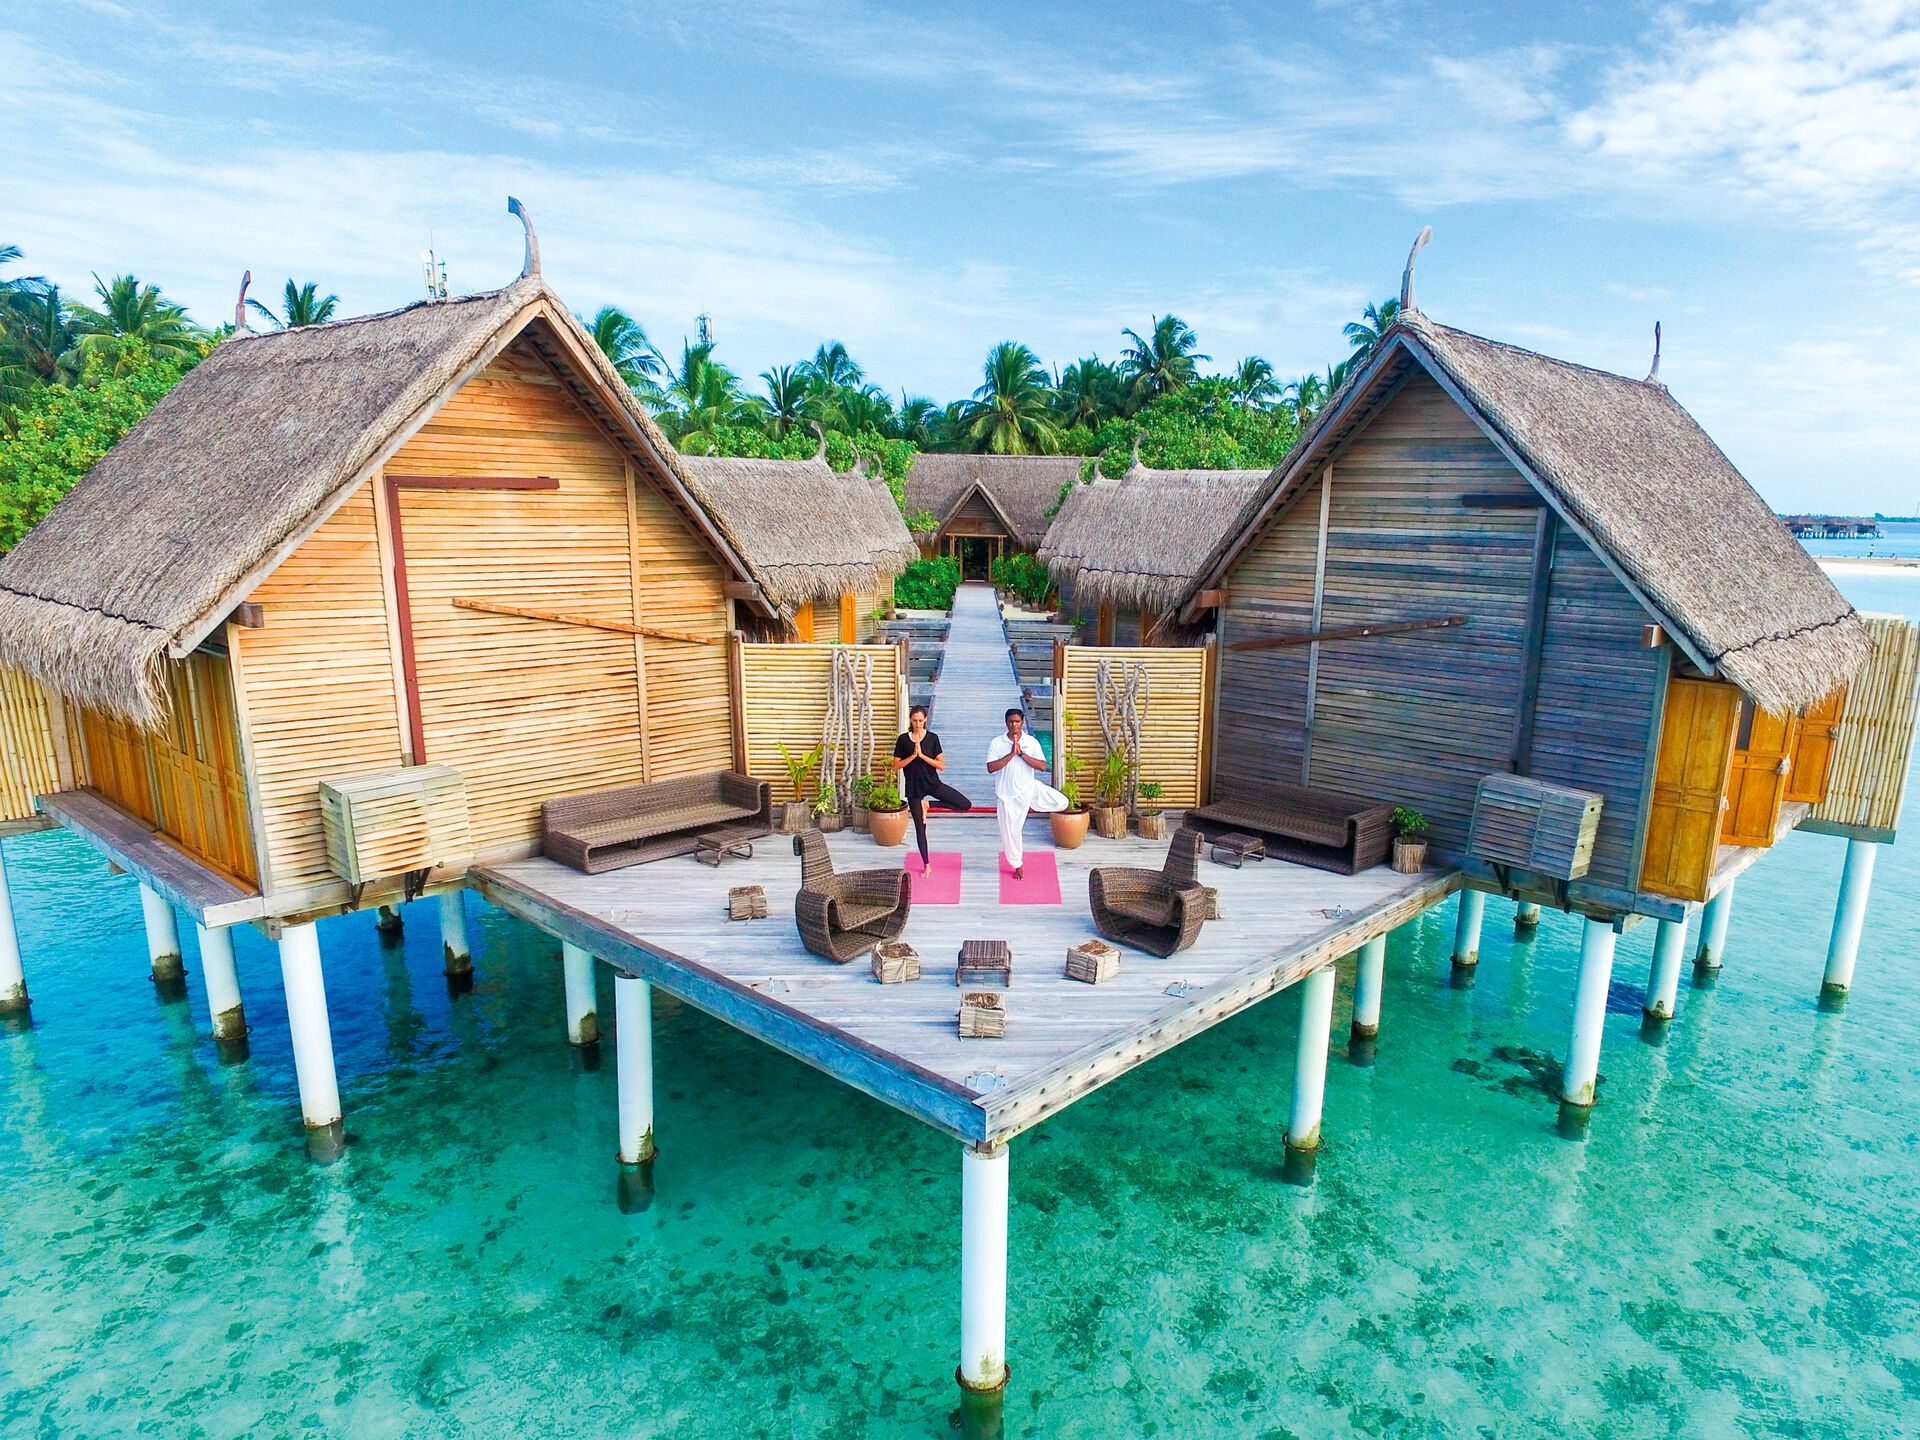 Maldives - Hotel Constance Moofushi Maldives 5* - transfert inclus